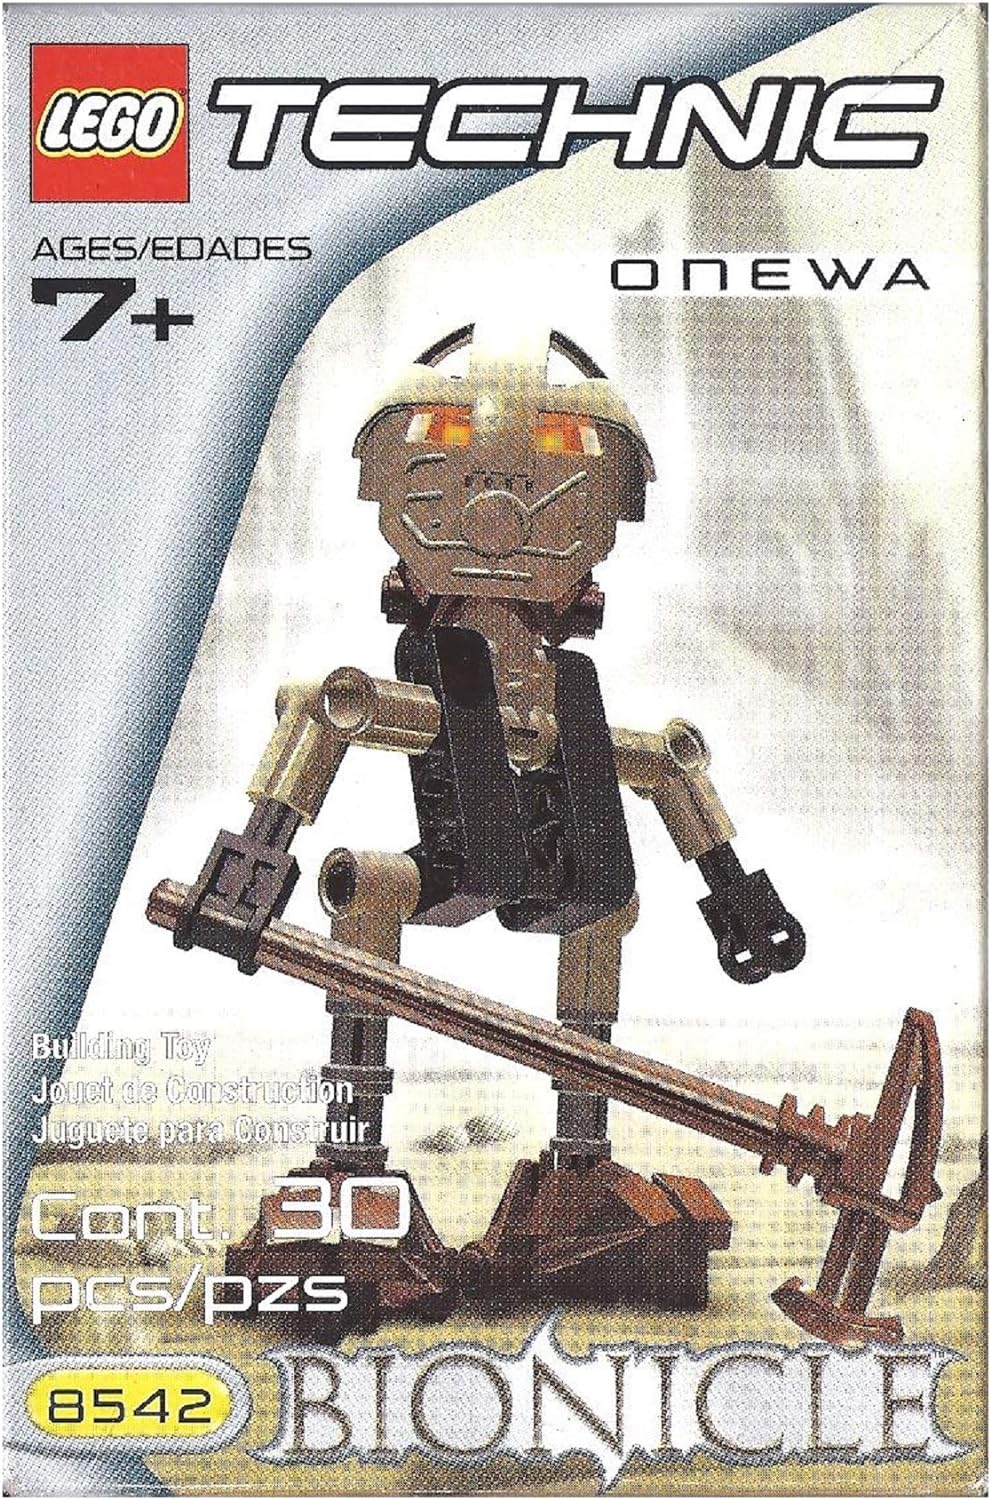 Lego Technic Bionicle #8542 Onewa